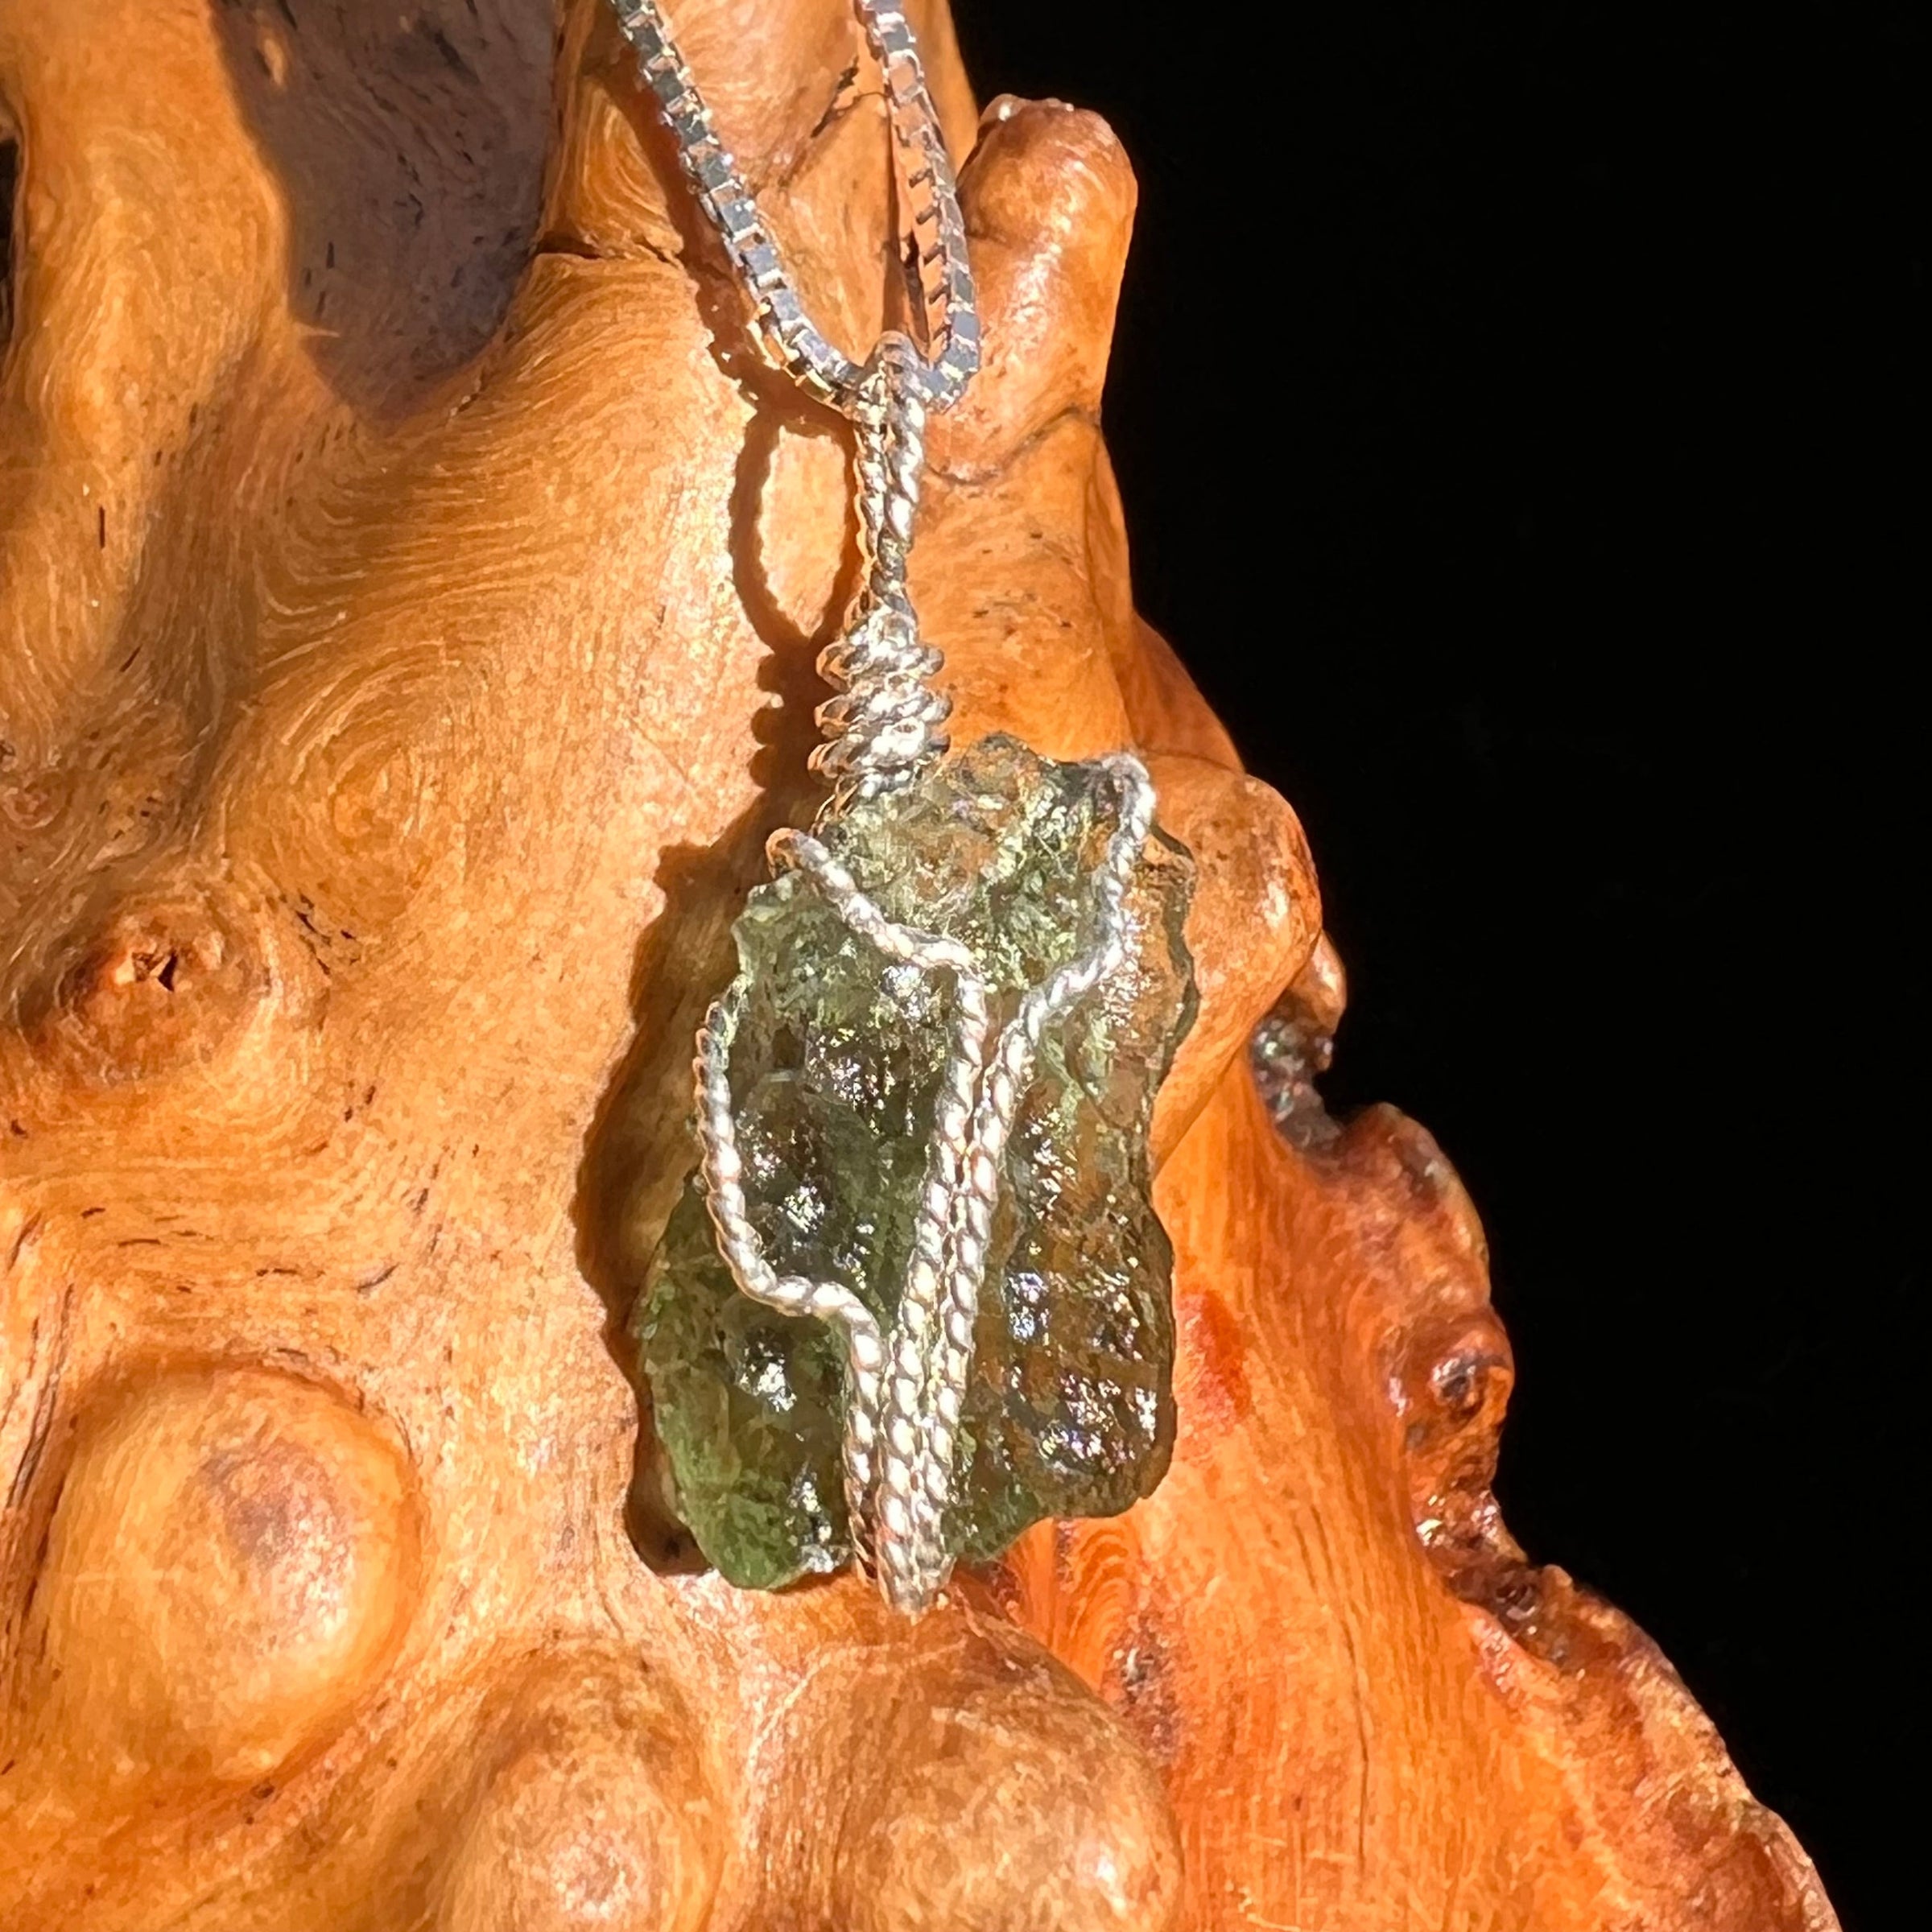 Moldavite Wire Wrapped Pendant Sterling Silver #5777-Moldavite Life